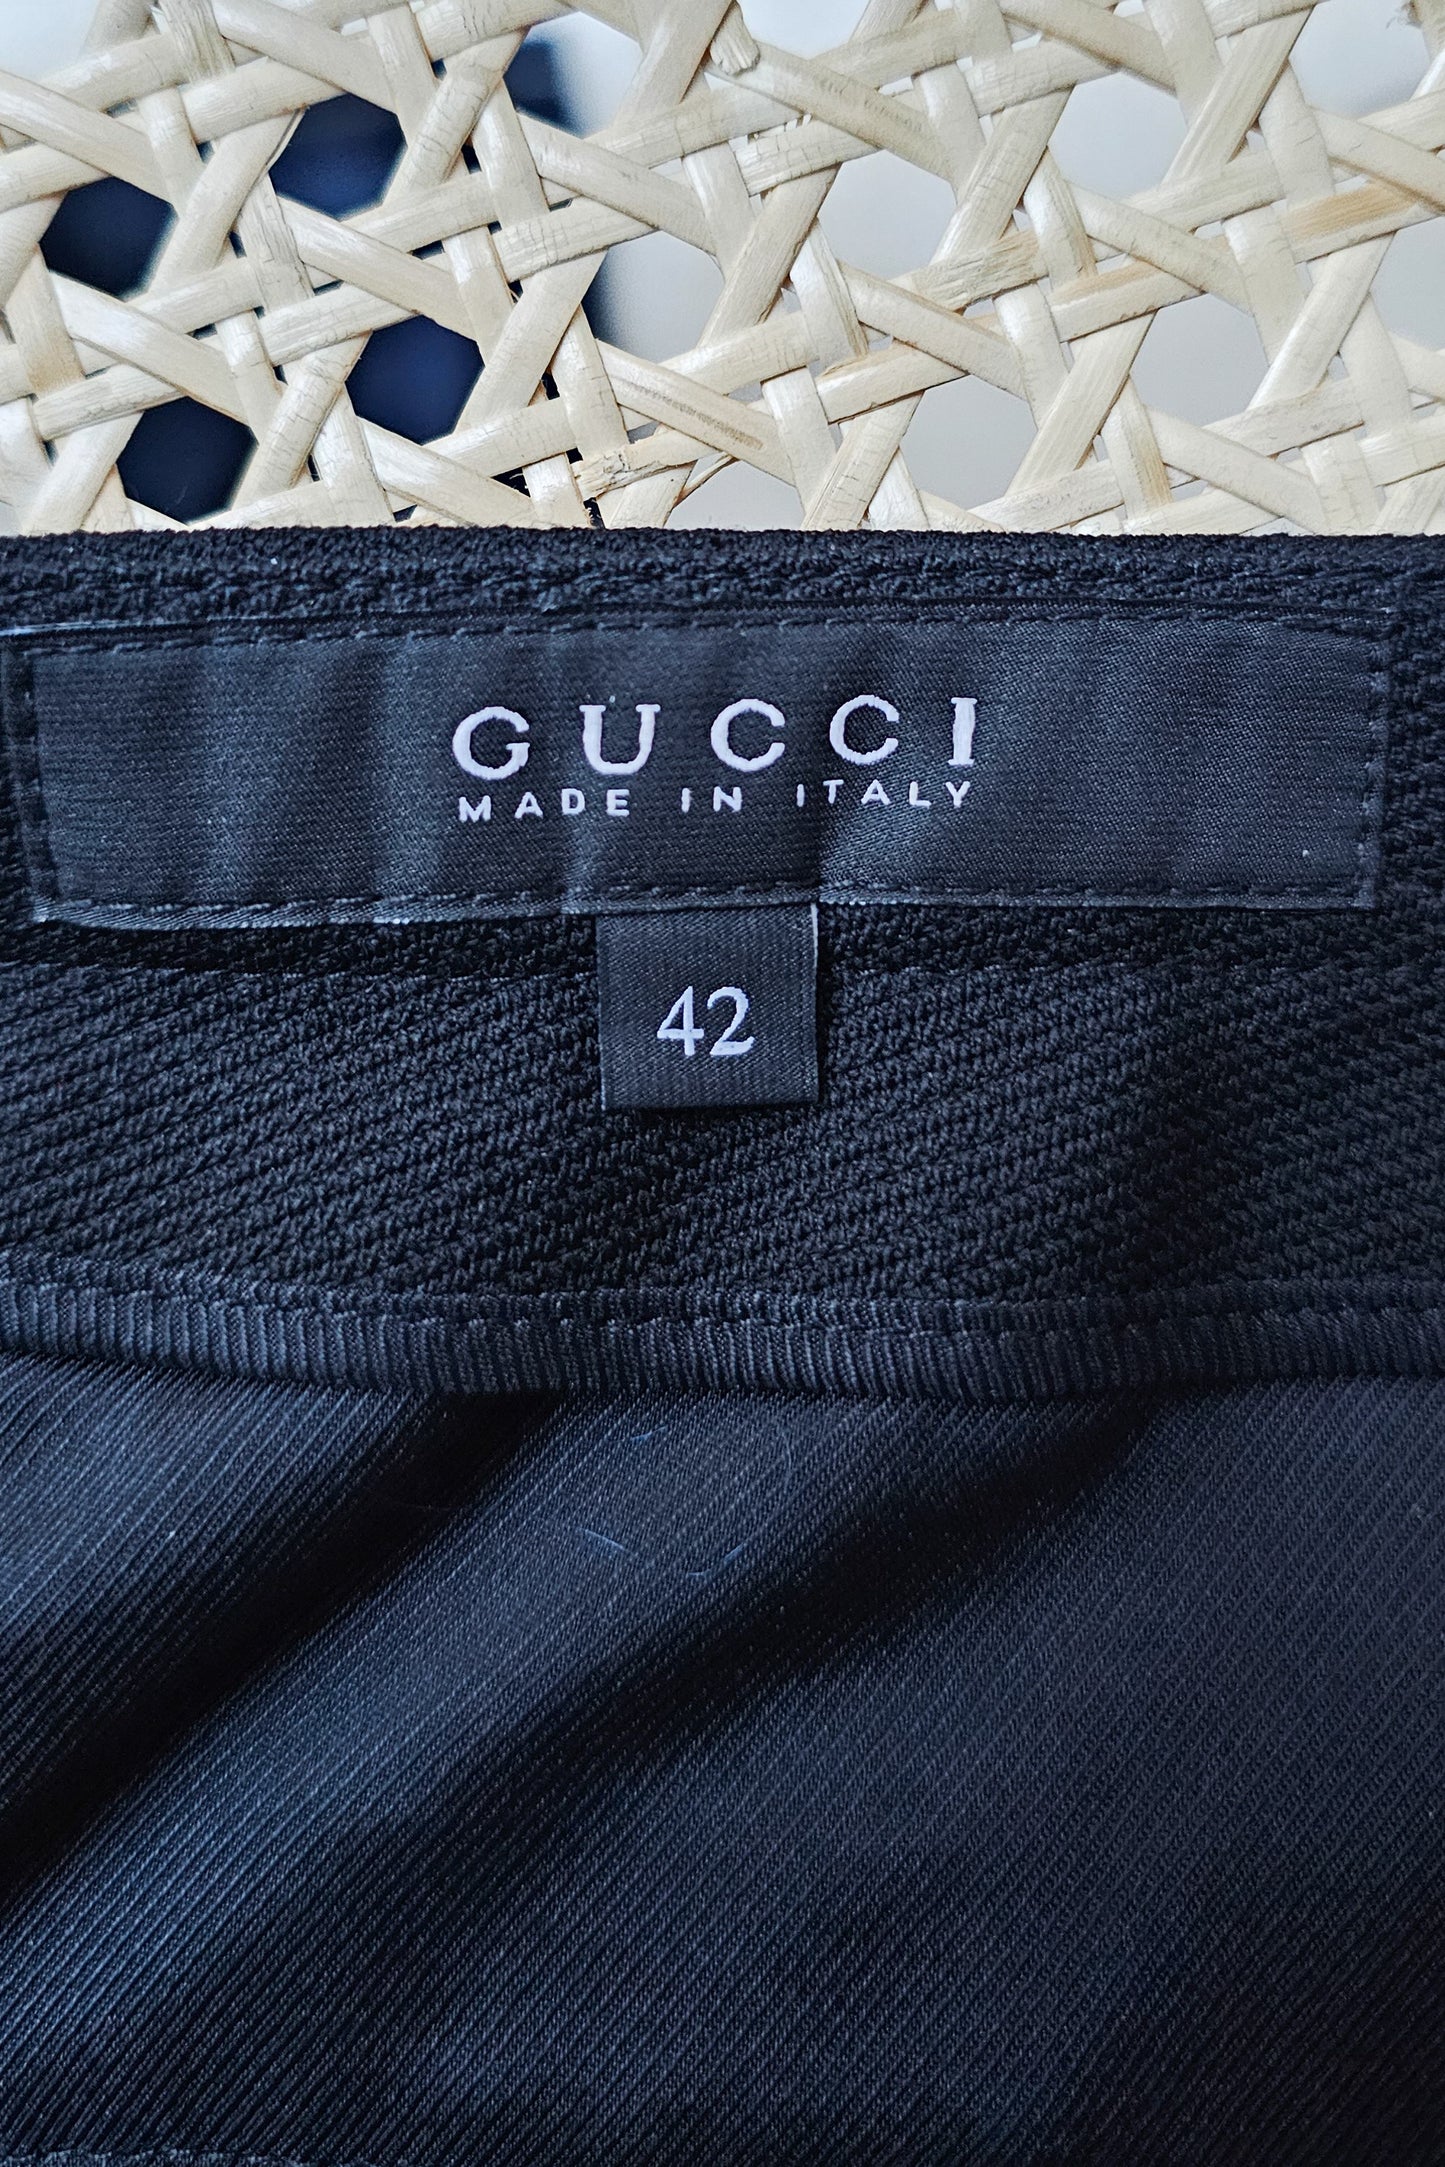 Gucci pants